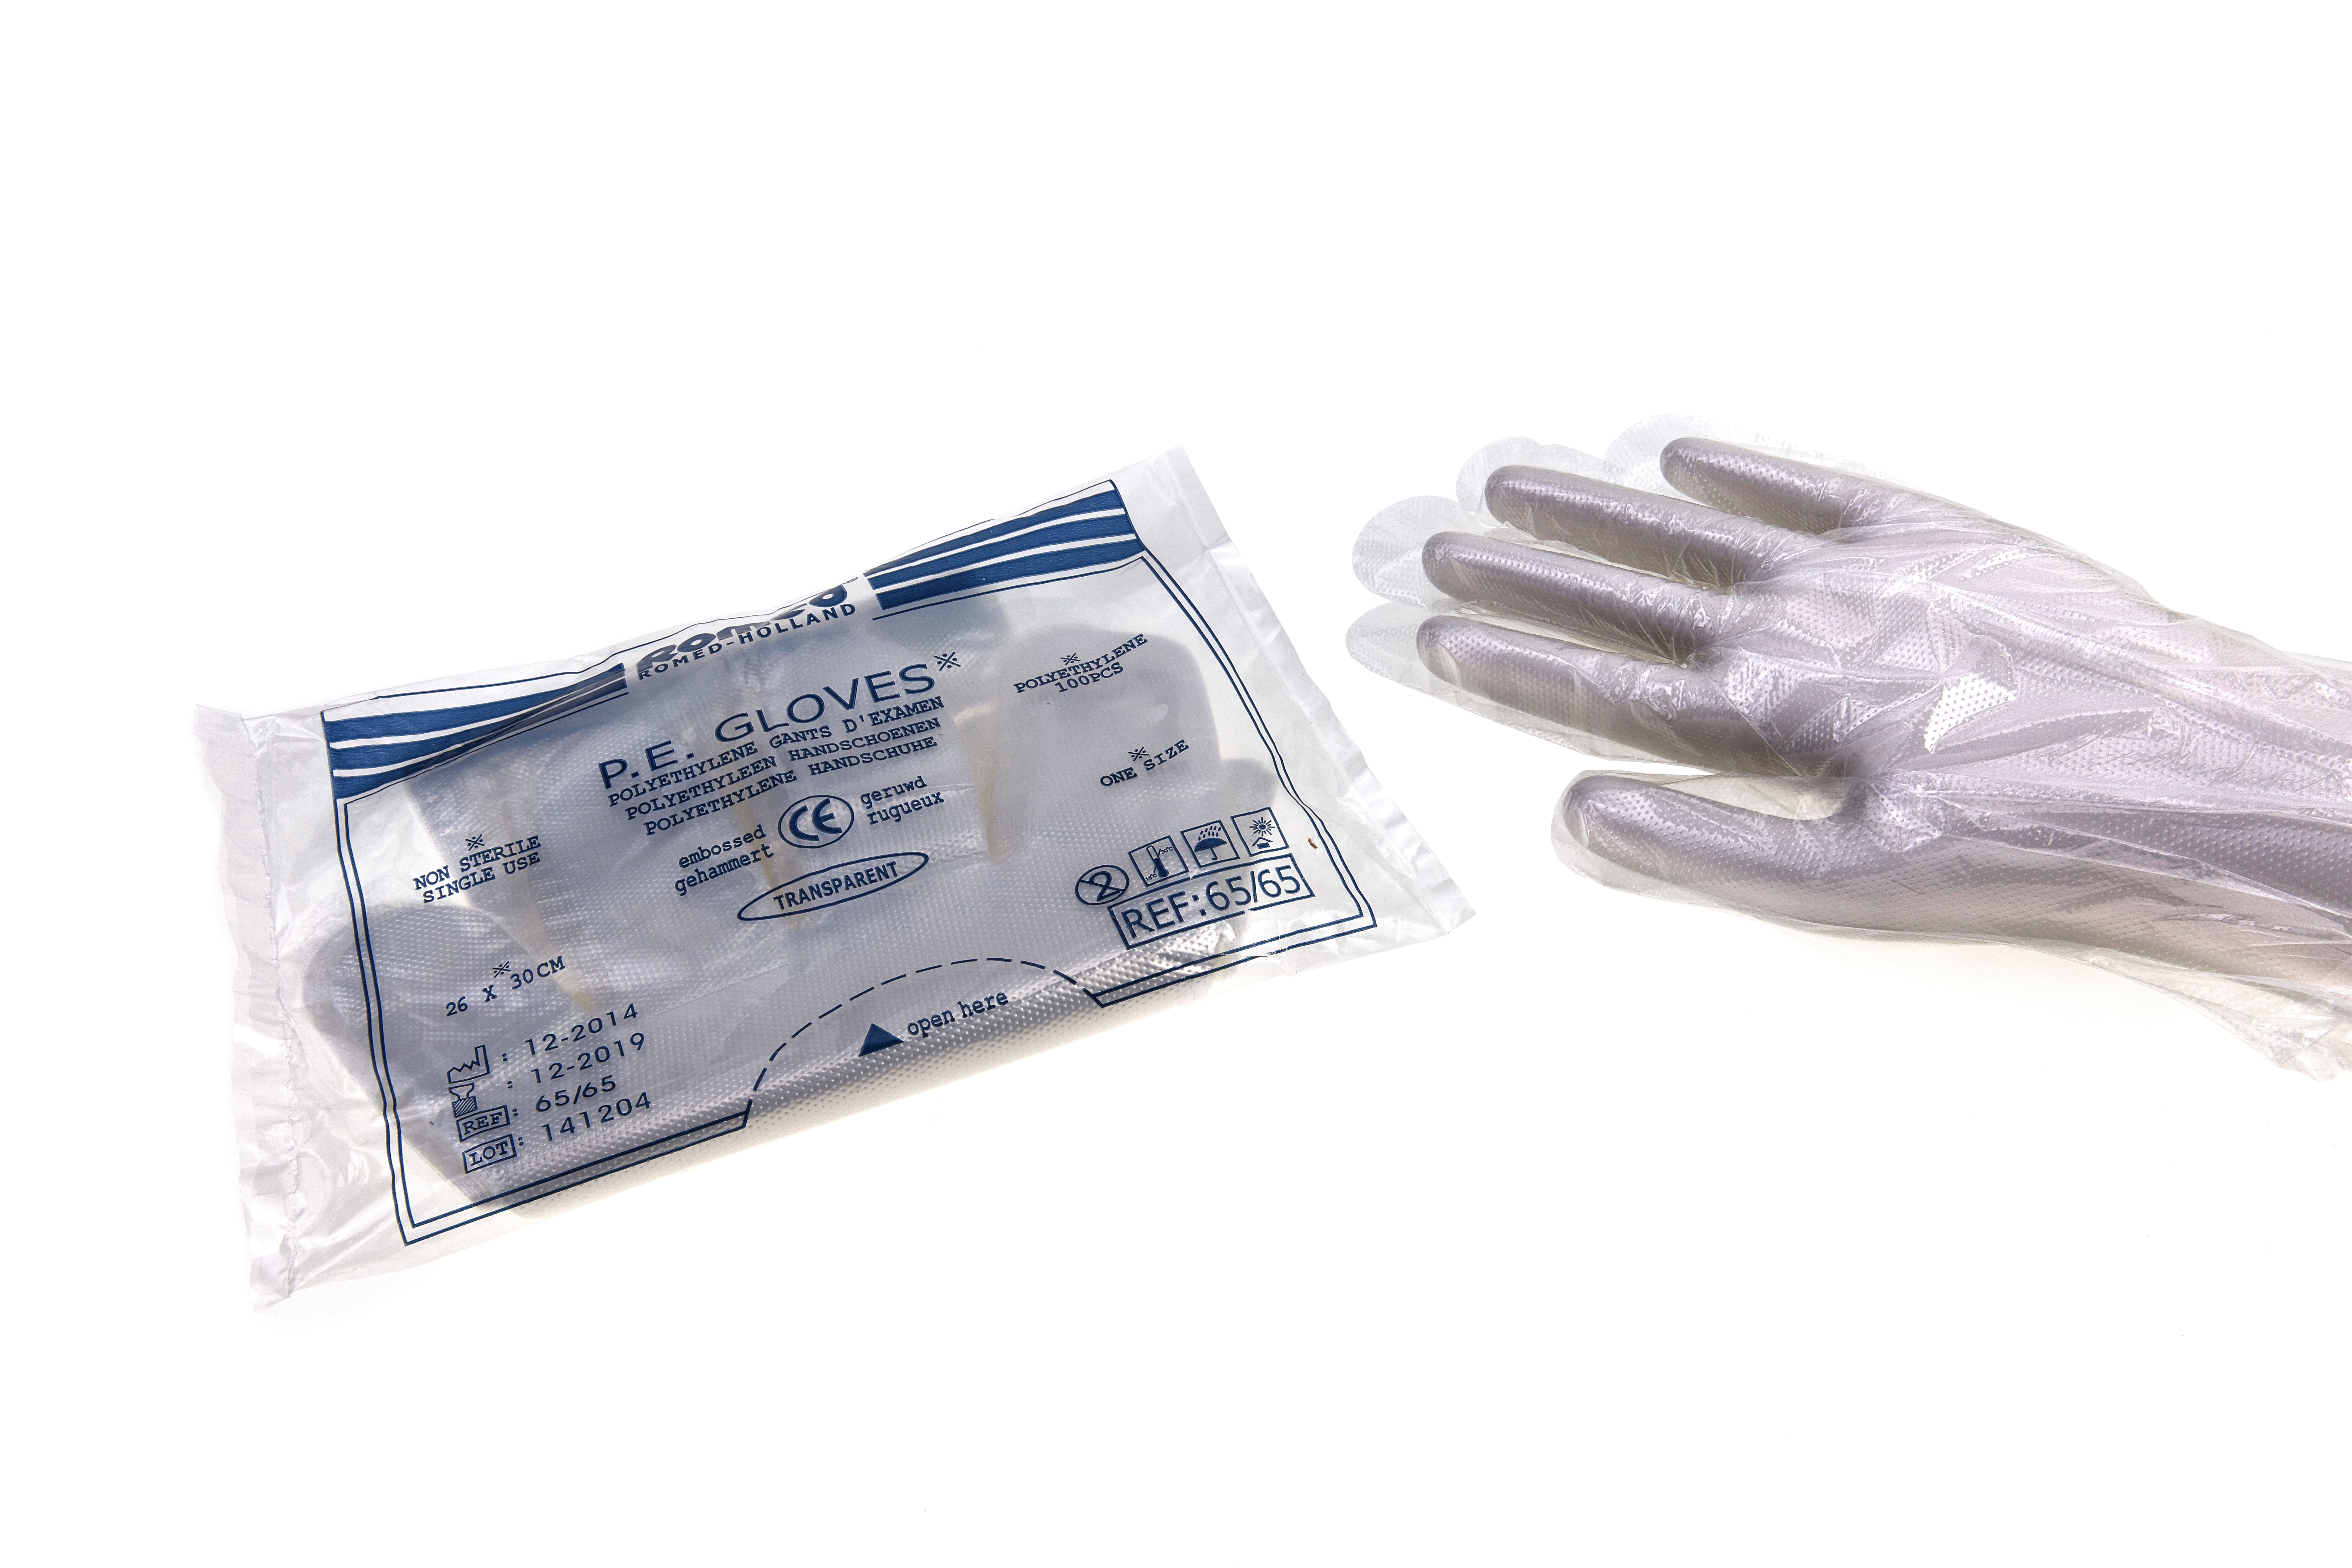 61/60 Romed polyethylene gloves+, non sterile, plain, extra strong, 100 pcs in a polybag, 100 x 100 pcs = 10.000 pcs in a carton.